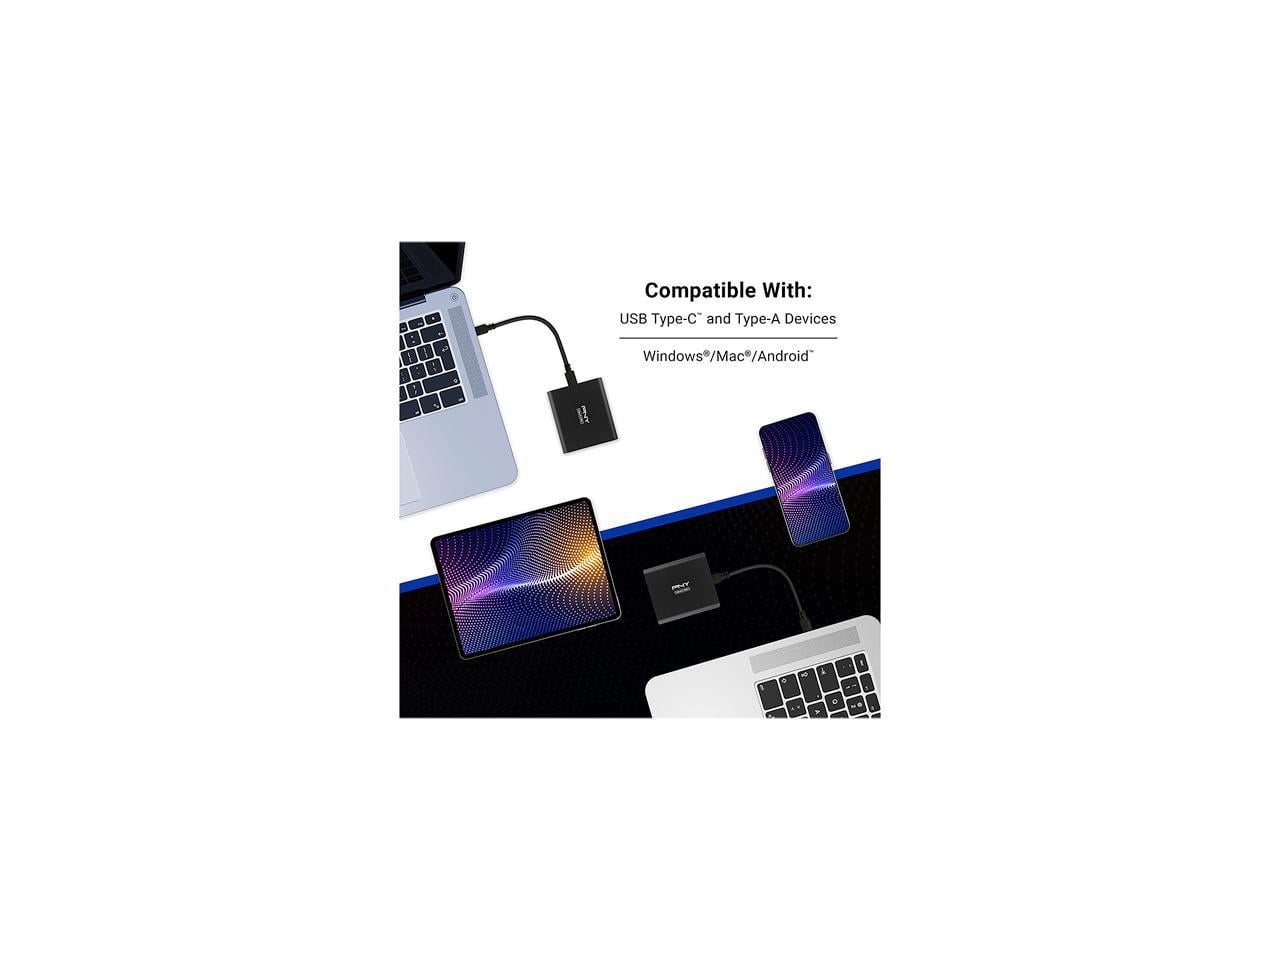 EliteX-PRO USB 3.2 Gen 2x2 Type-C Portable SSD